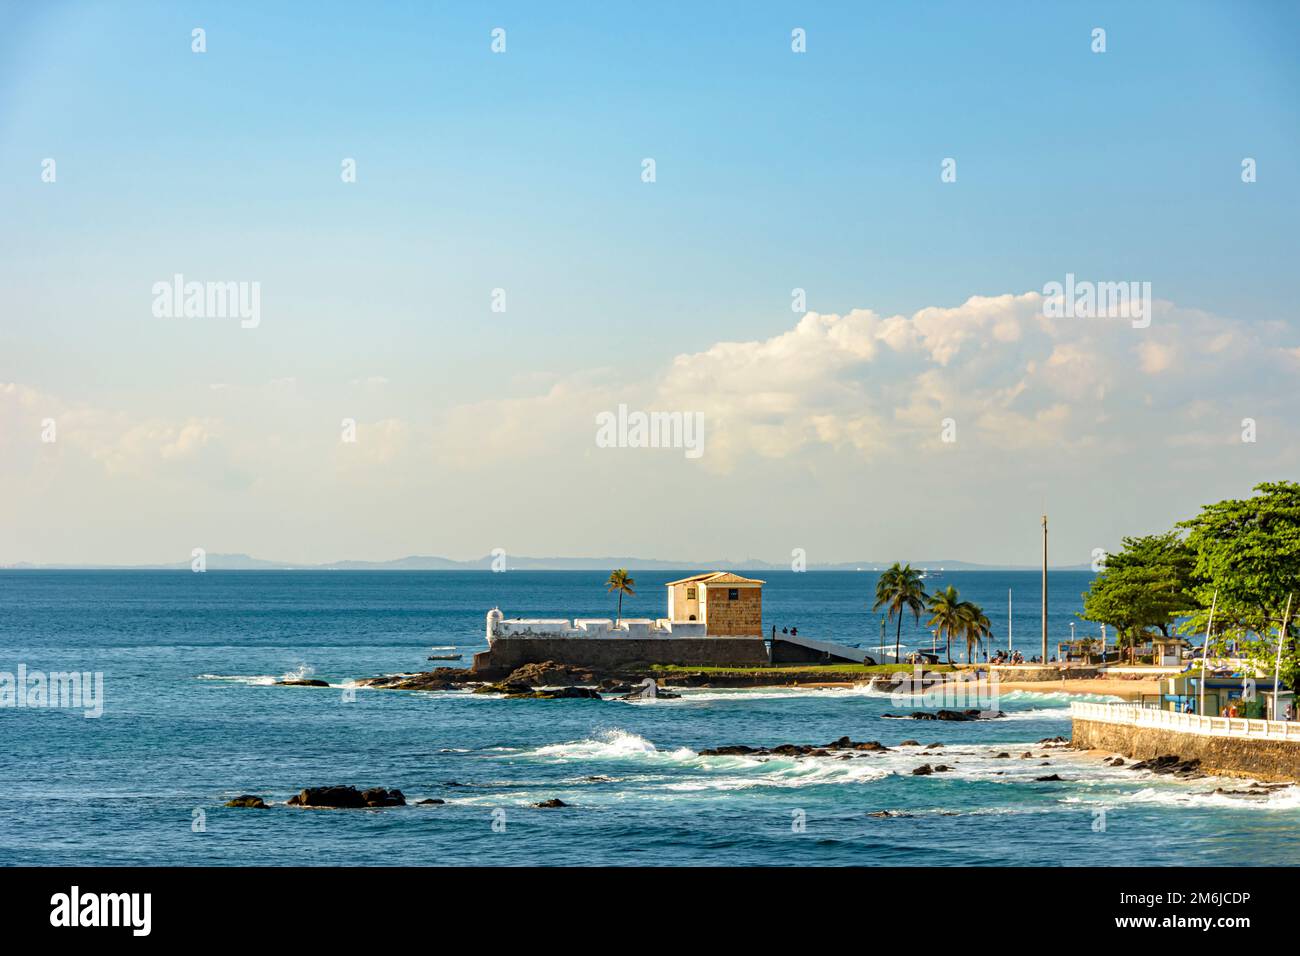 Scenic view of the old colonial Portuguese Fort Santa Maria in Barra beach, Salvador, Brazil Stock Photo